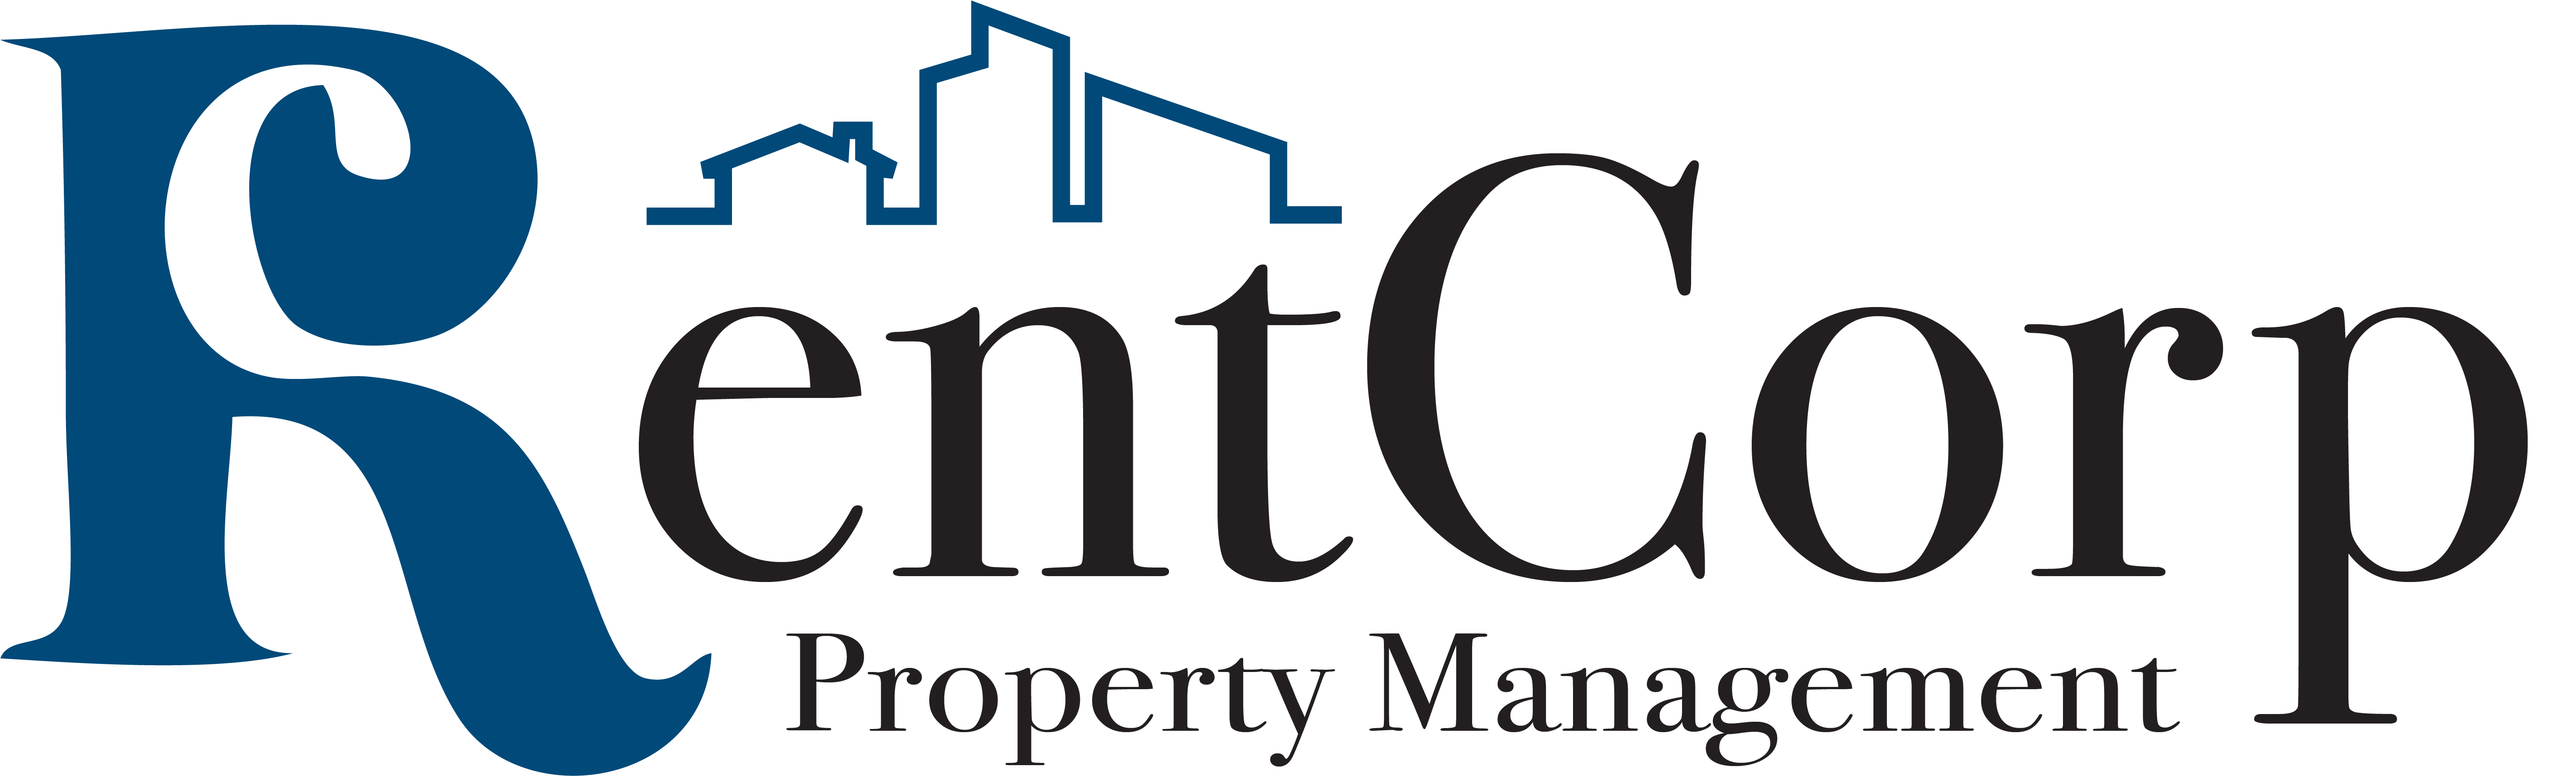 RentCorp Property Management Inc.